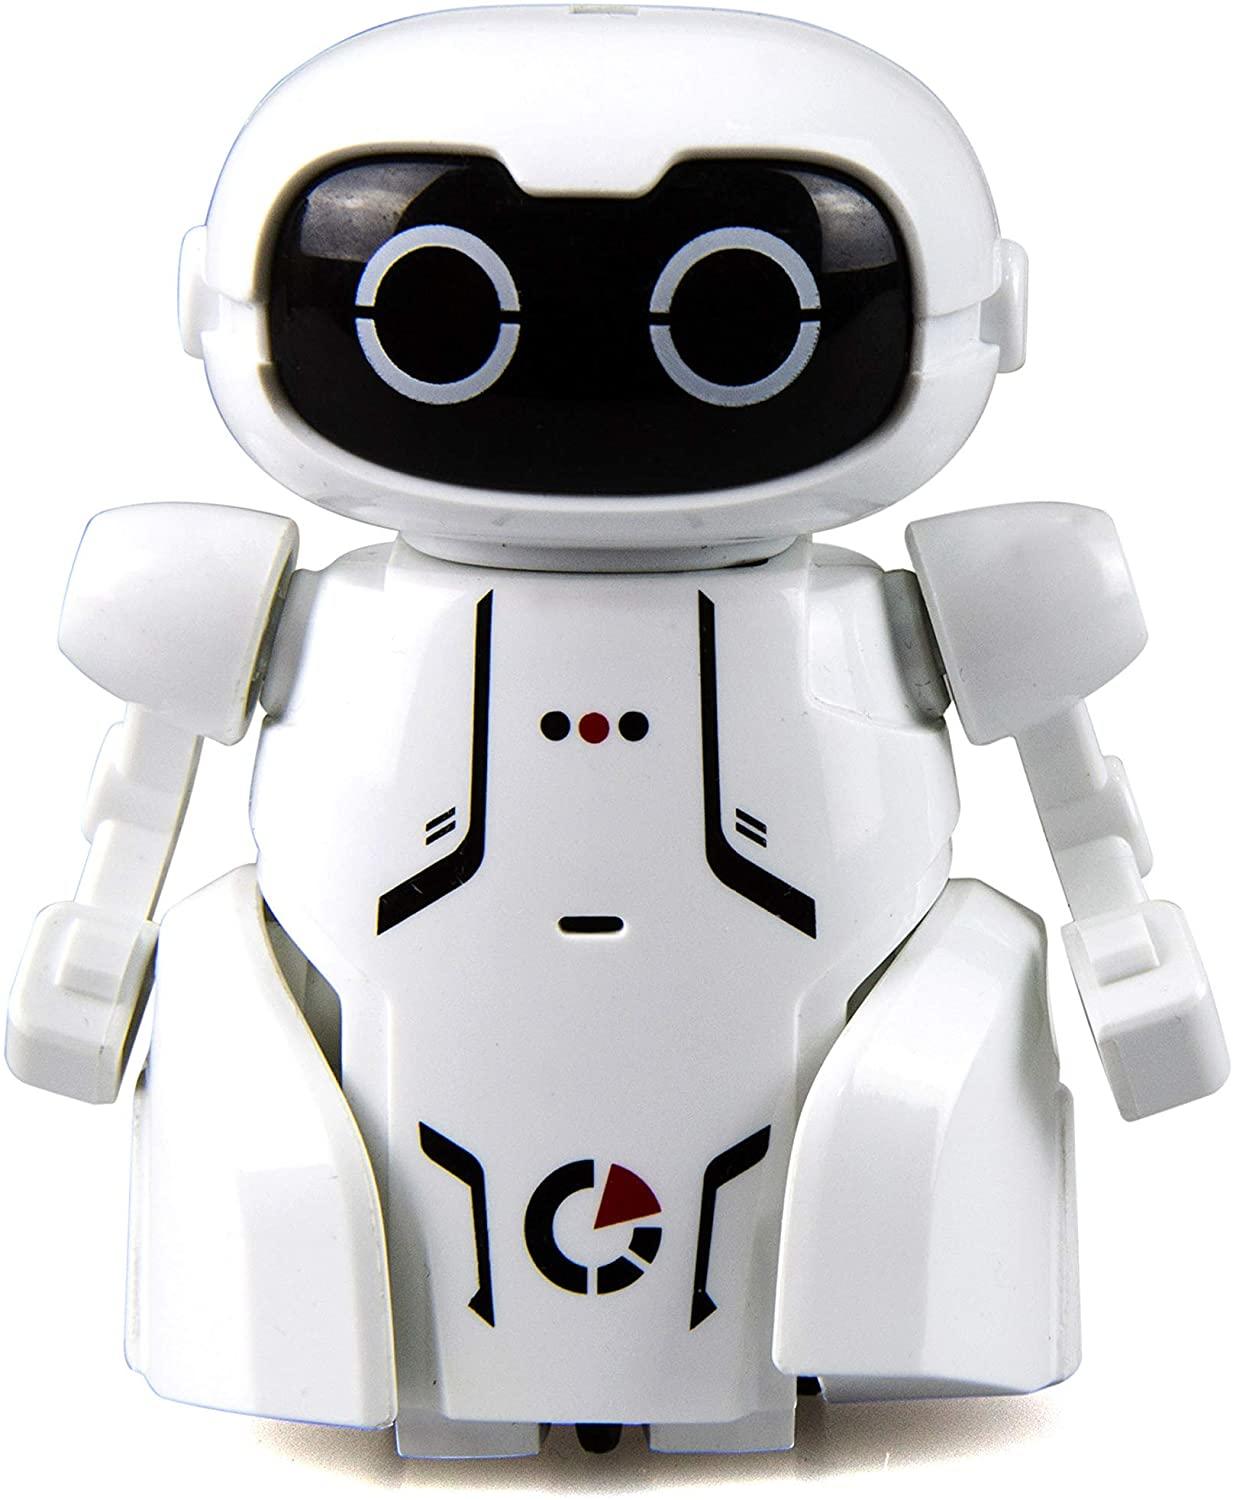 Silverlit 88058 Mini Robot Asst Toymaster Ballina